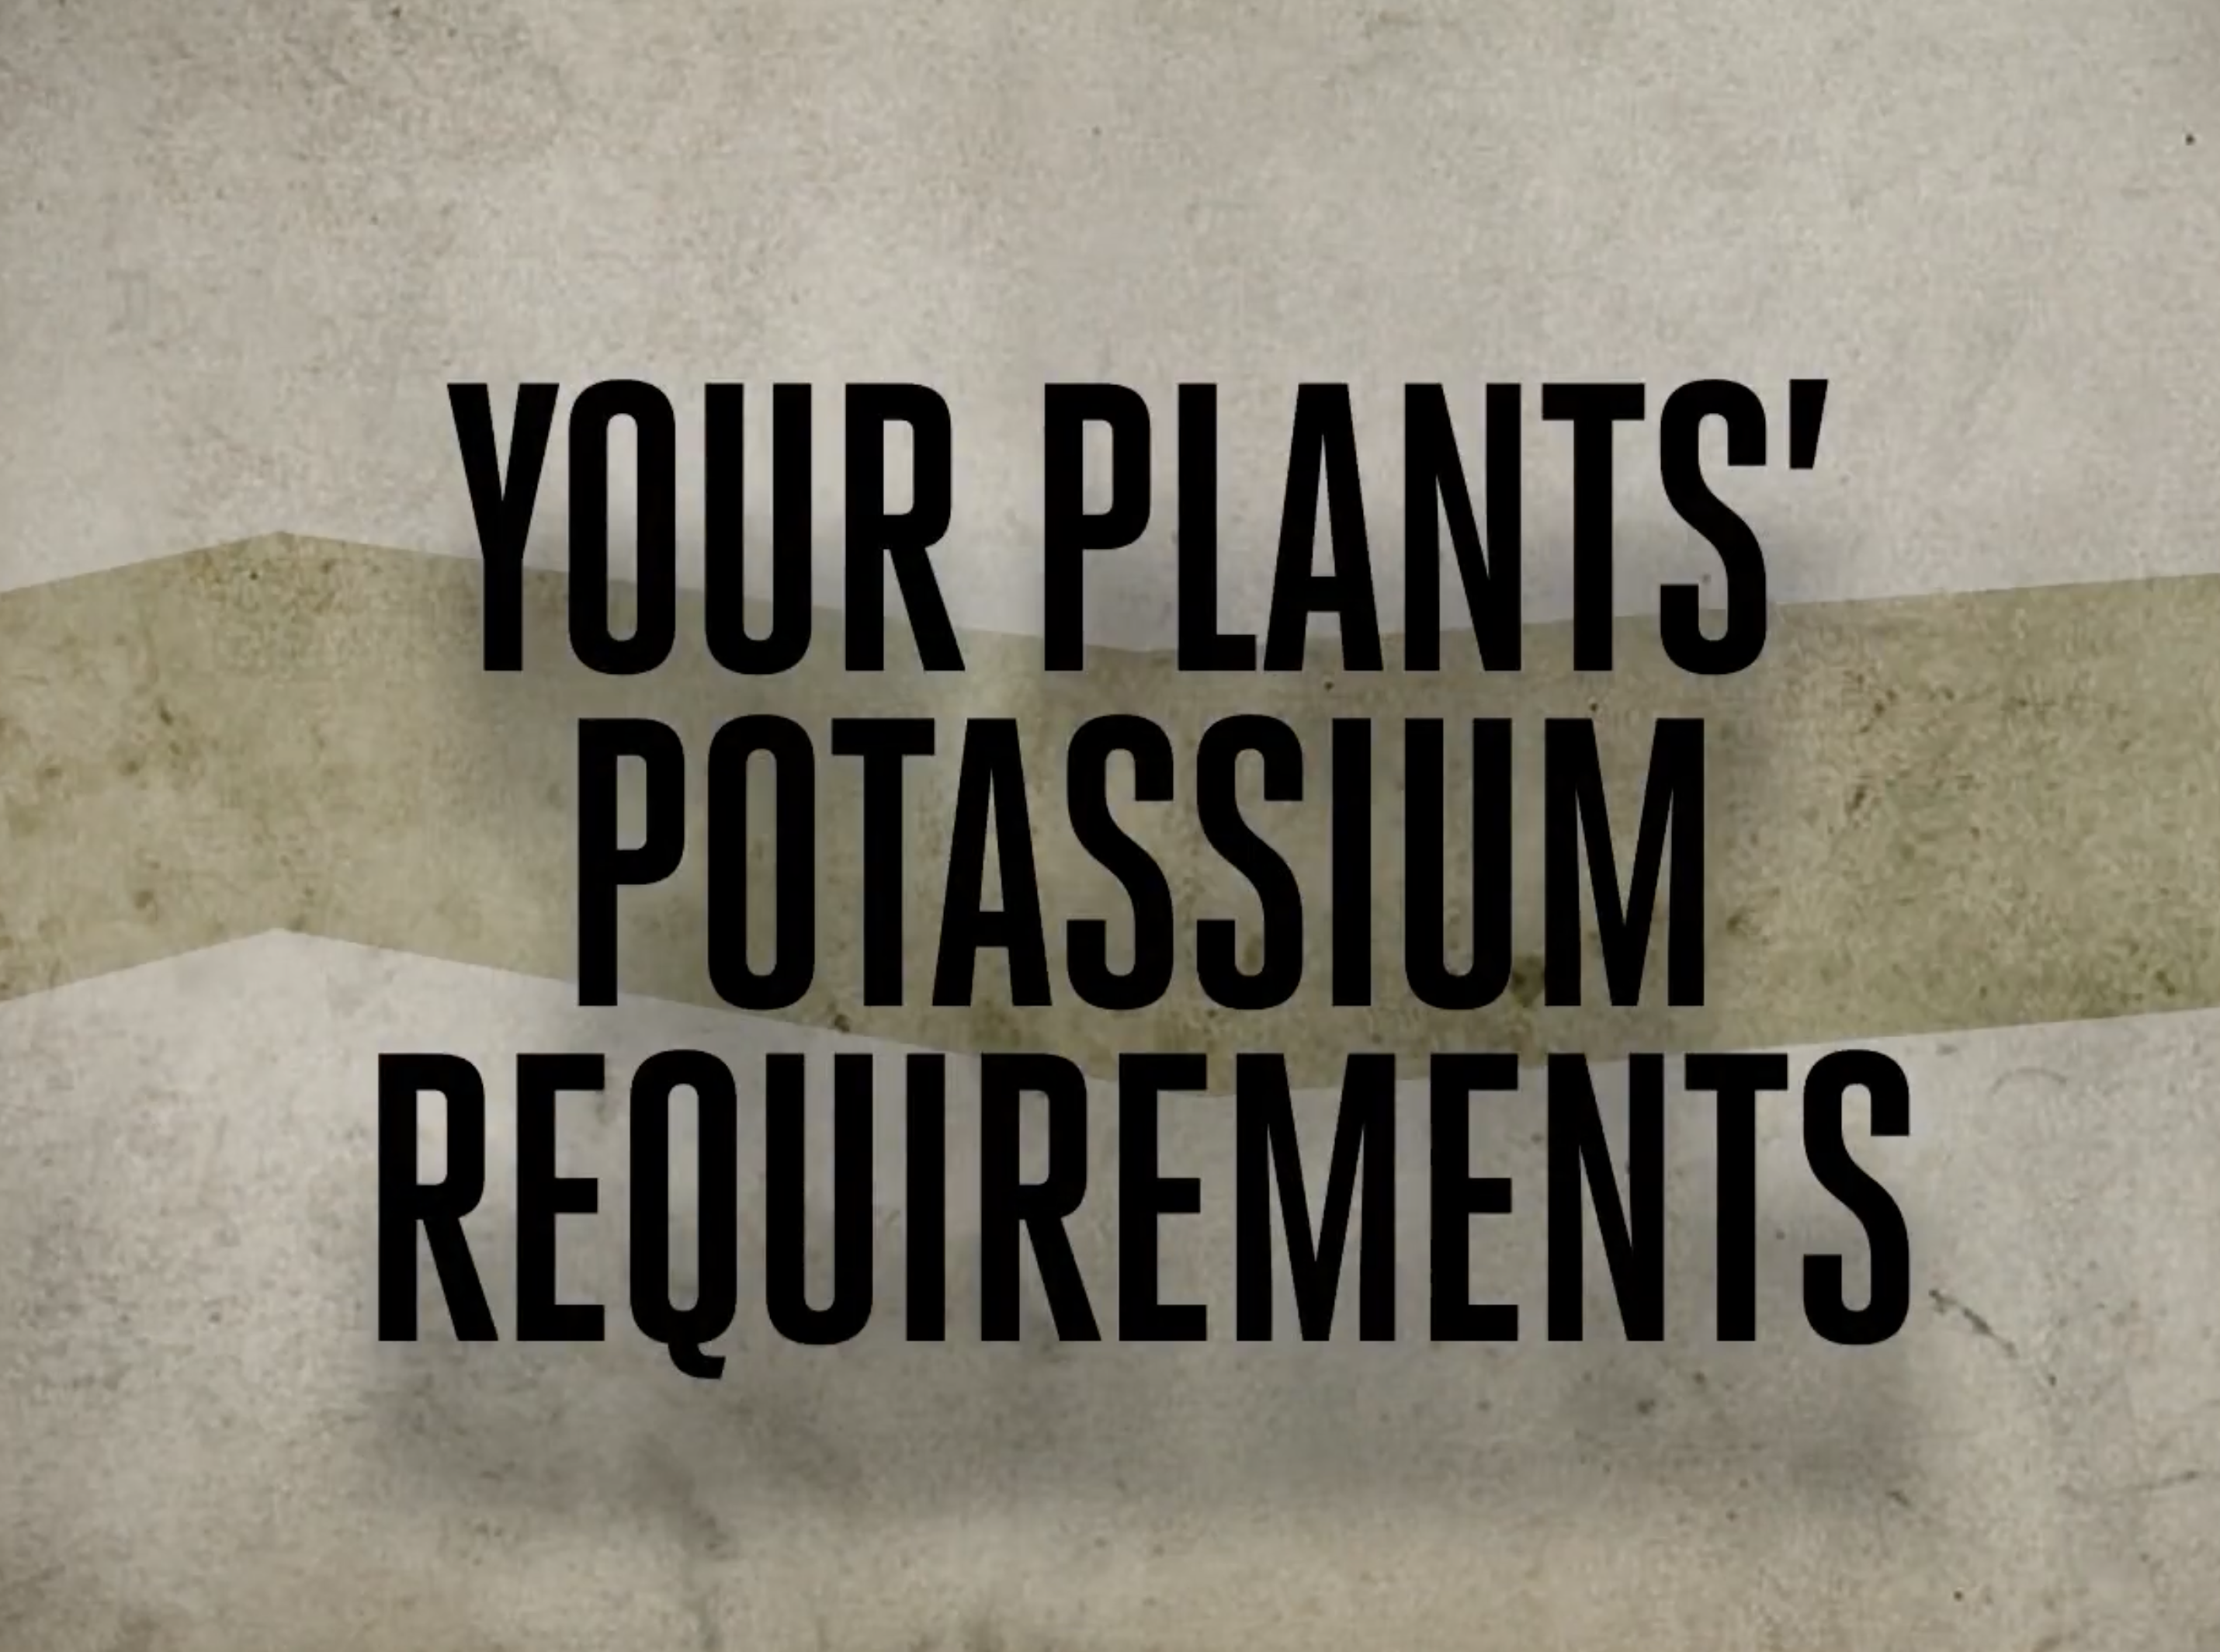 CANNA - Your Plants' Potassium Requirements